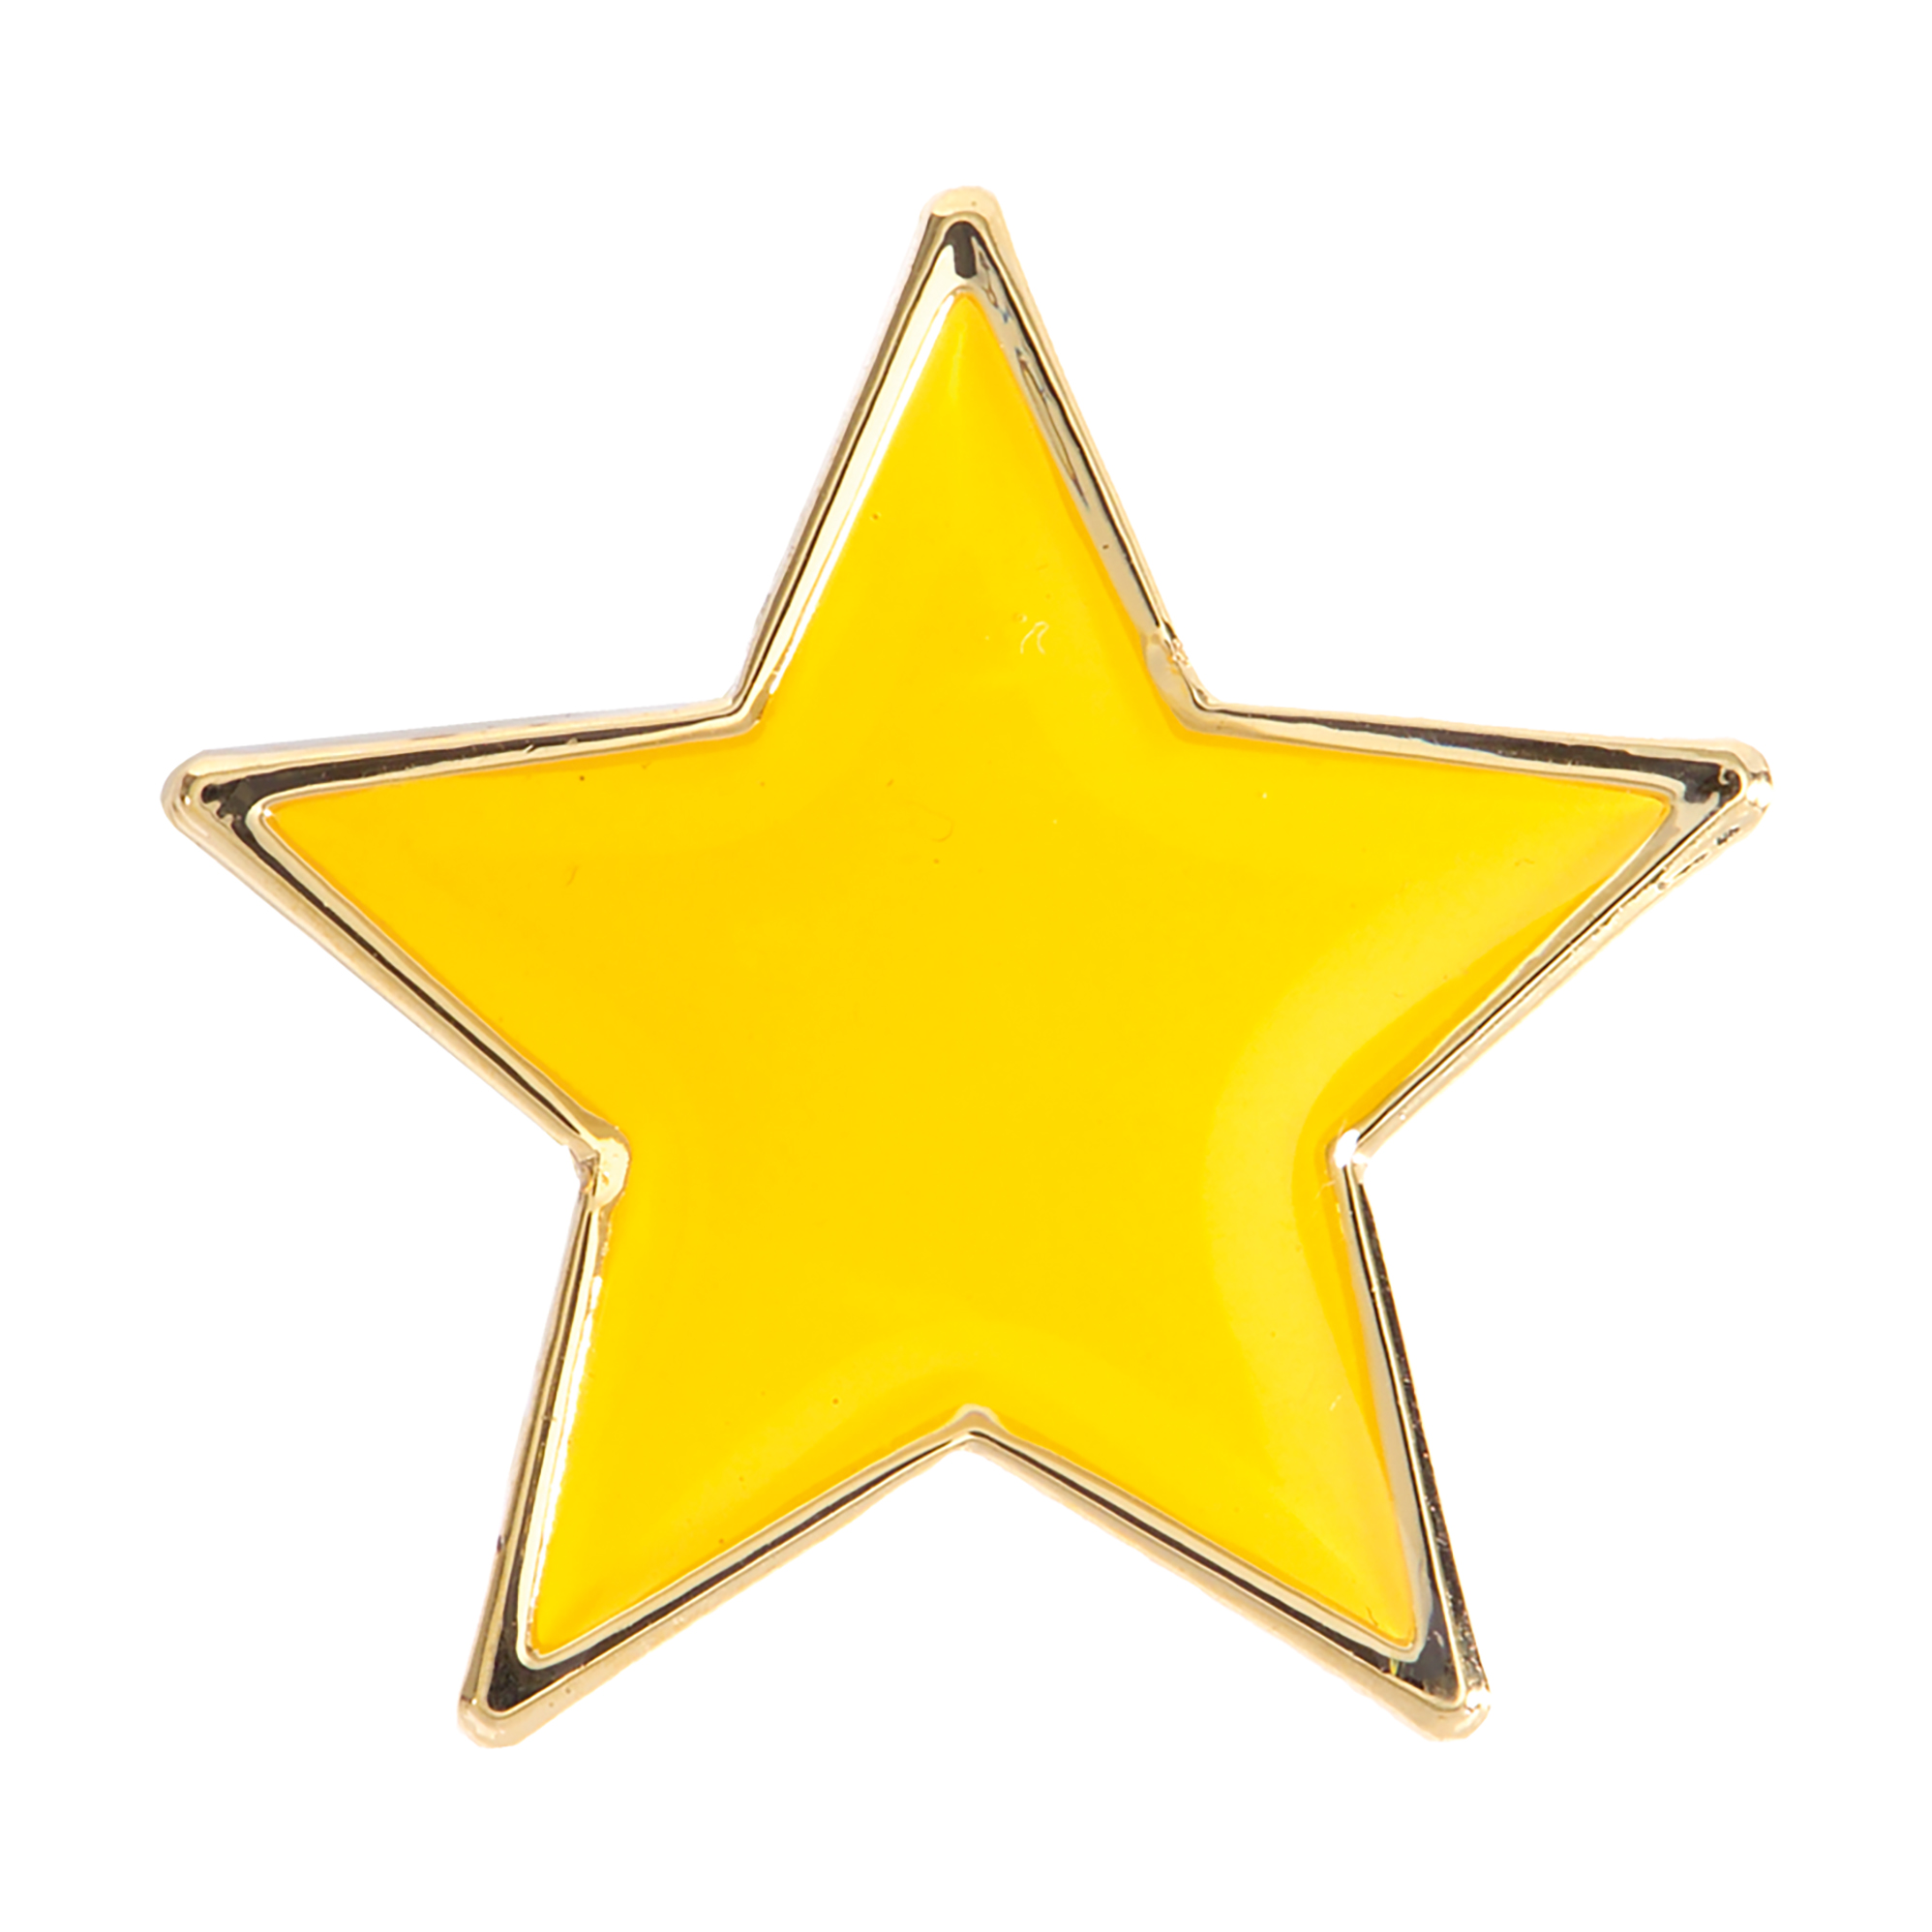 YELLOW STAR ENAMEL BADGE